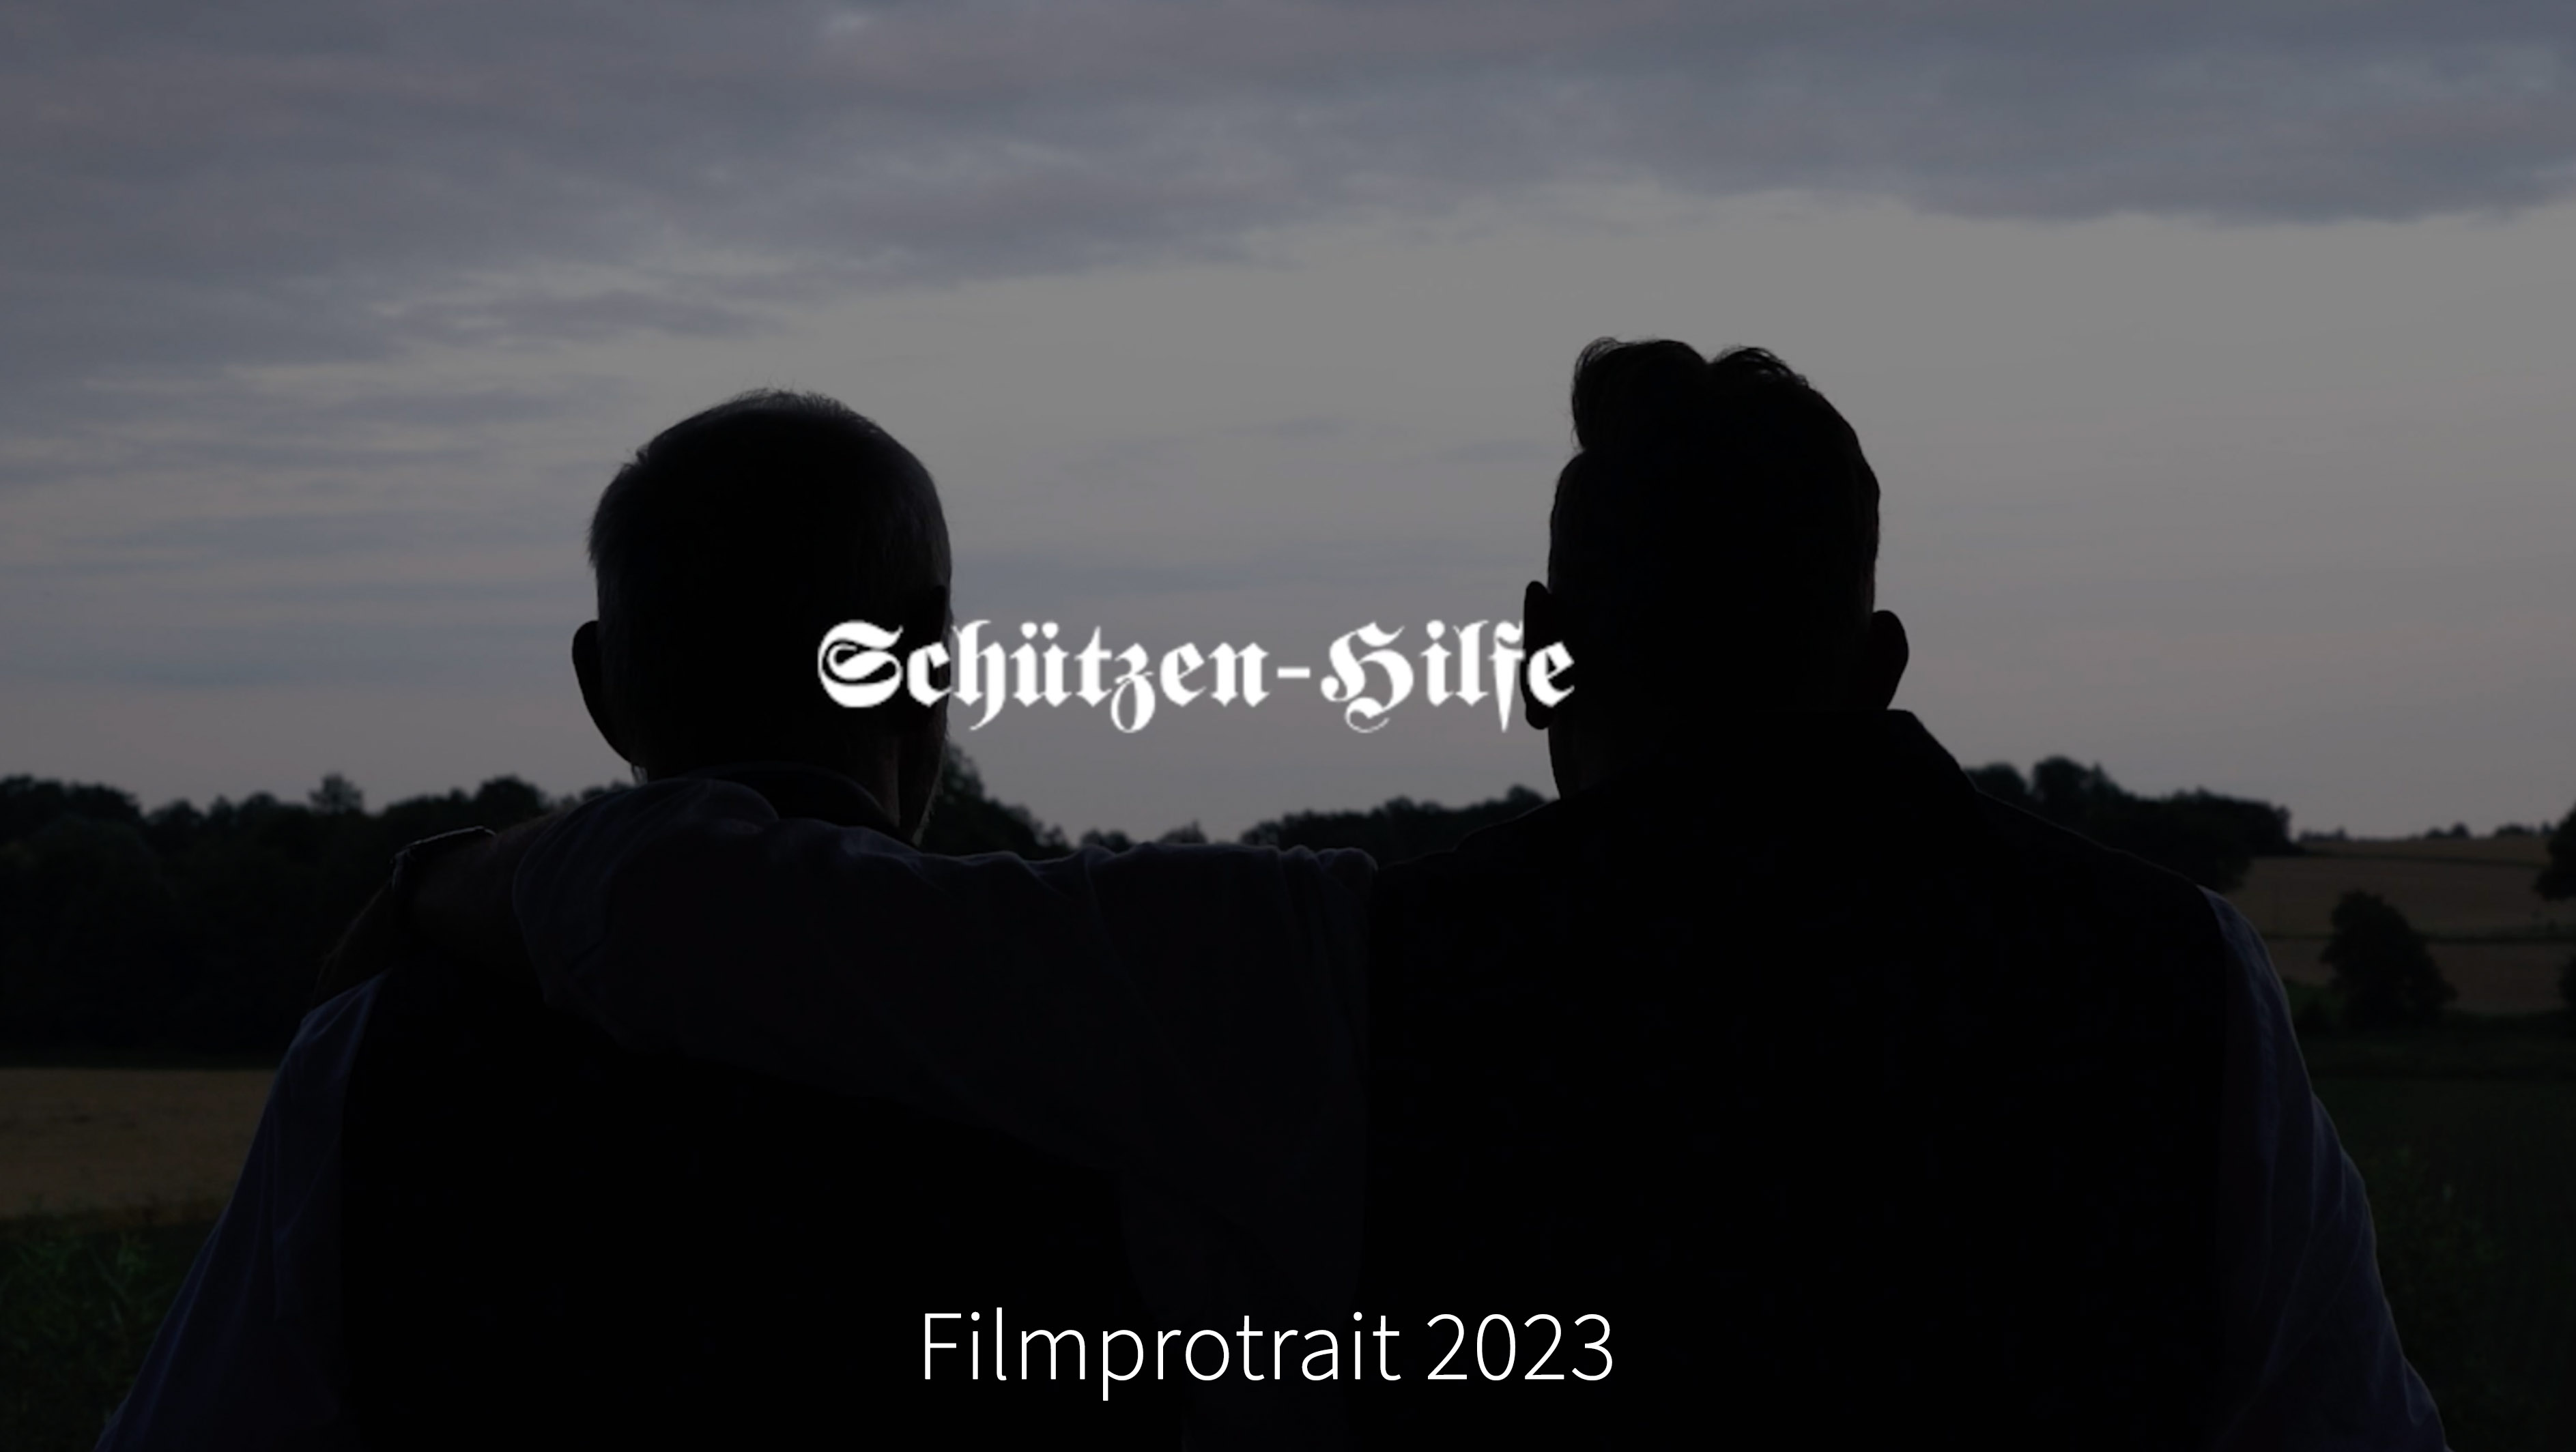 Schützen-Hilfe Filmportrait 2023